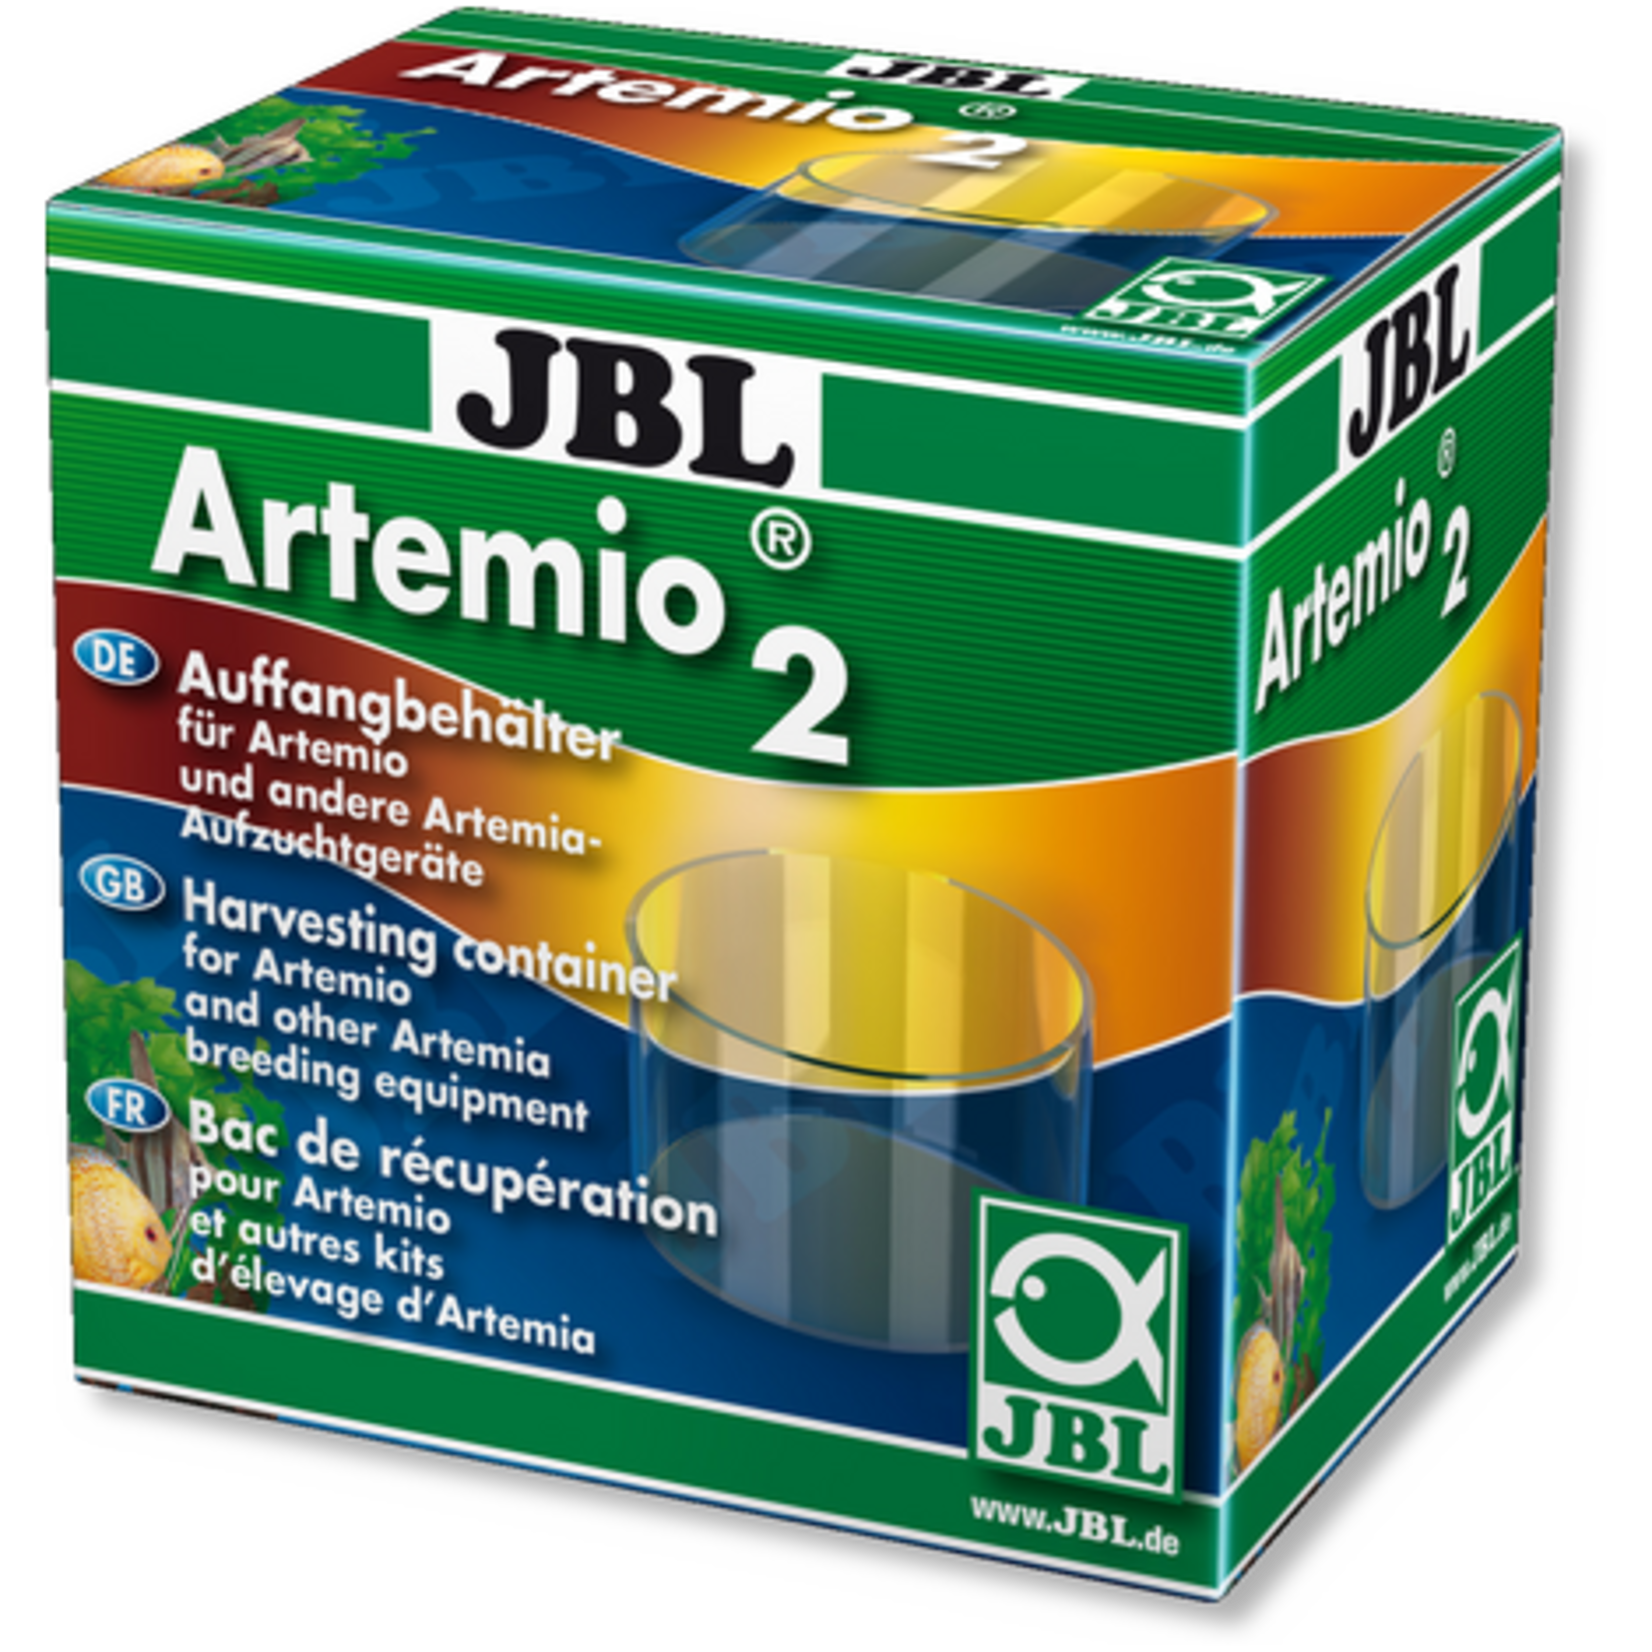 JBL JBL Artemio 2 (container)